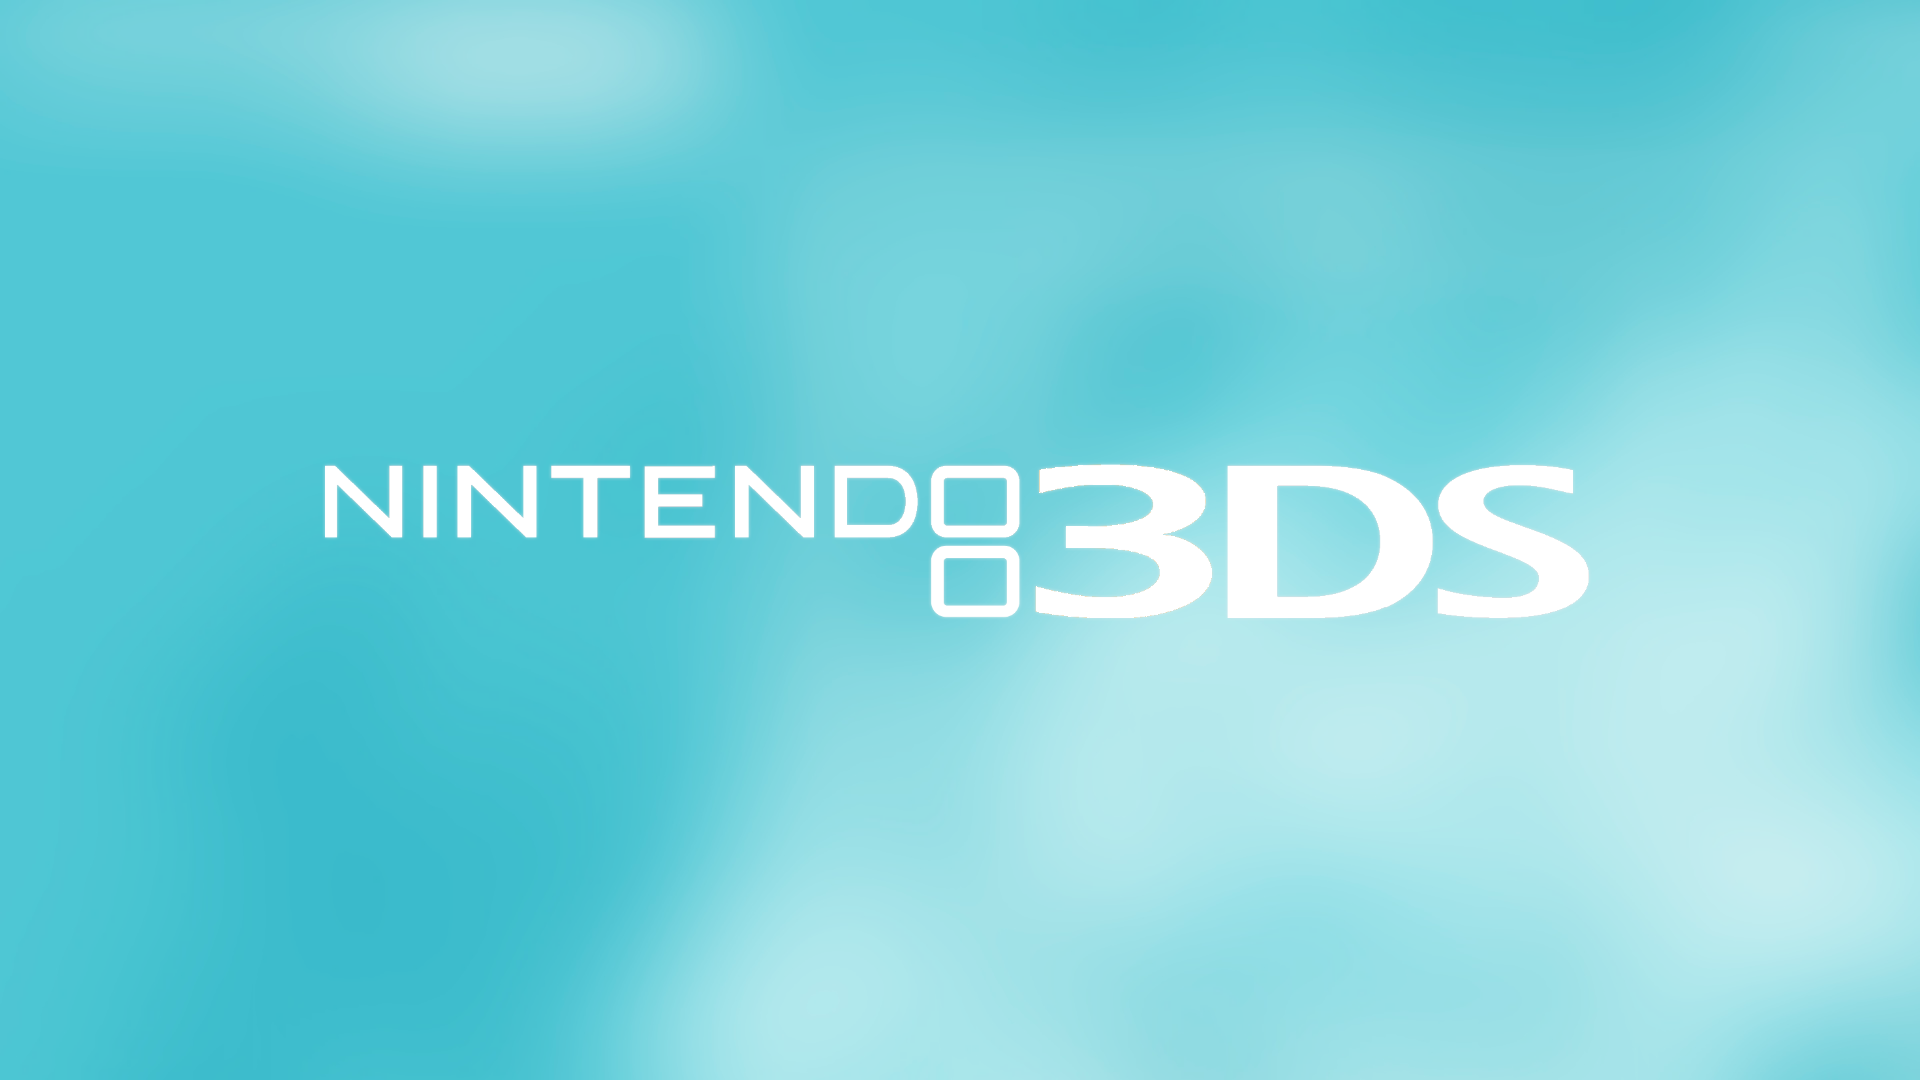 Nintendo 3ds Wallpaper Hd - HD Wallpaper 